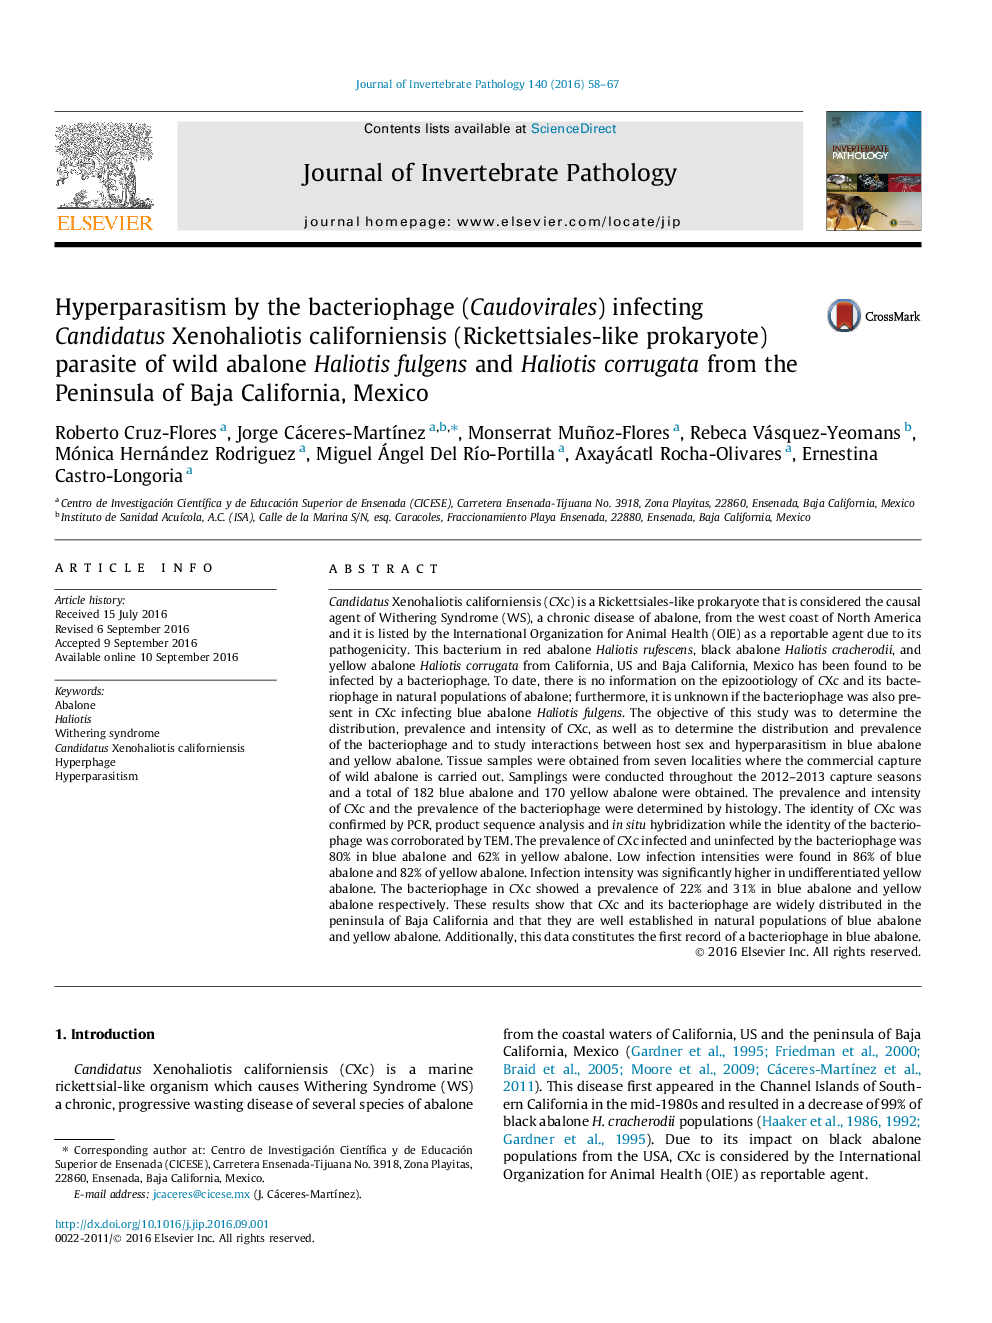 Hyperparasitism by the bacteriophage (Caudovirales) infecting Candidatus Xenohaliotis californiensis (Rickettsiales-like prokaryote) parasite of wild abalone Haliotis fulgens and Haliotis corrugata from the Peninsula of Baja California, Mexico